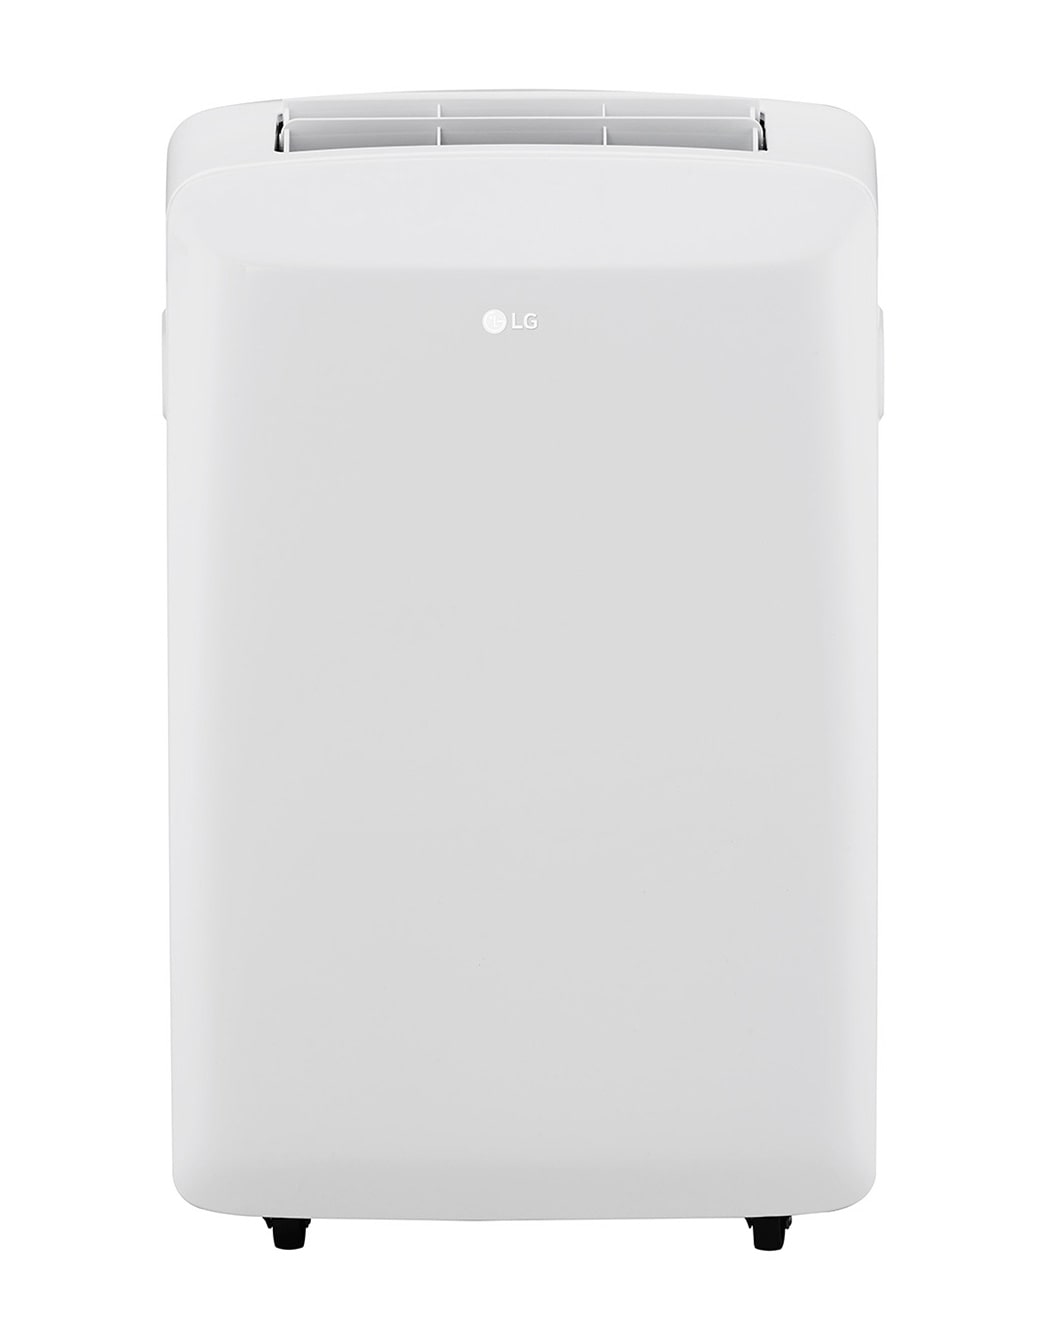 Lg Lp0817wsr 8000 Btu Portable Air Conditioner Lg Usa 6588